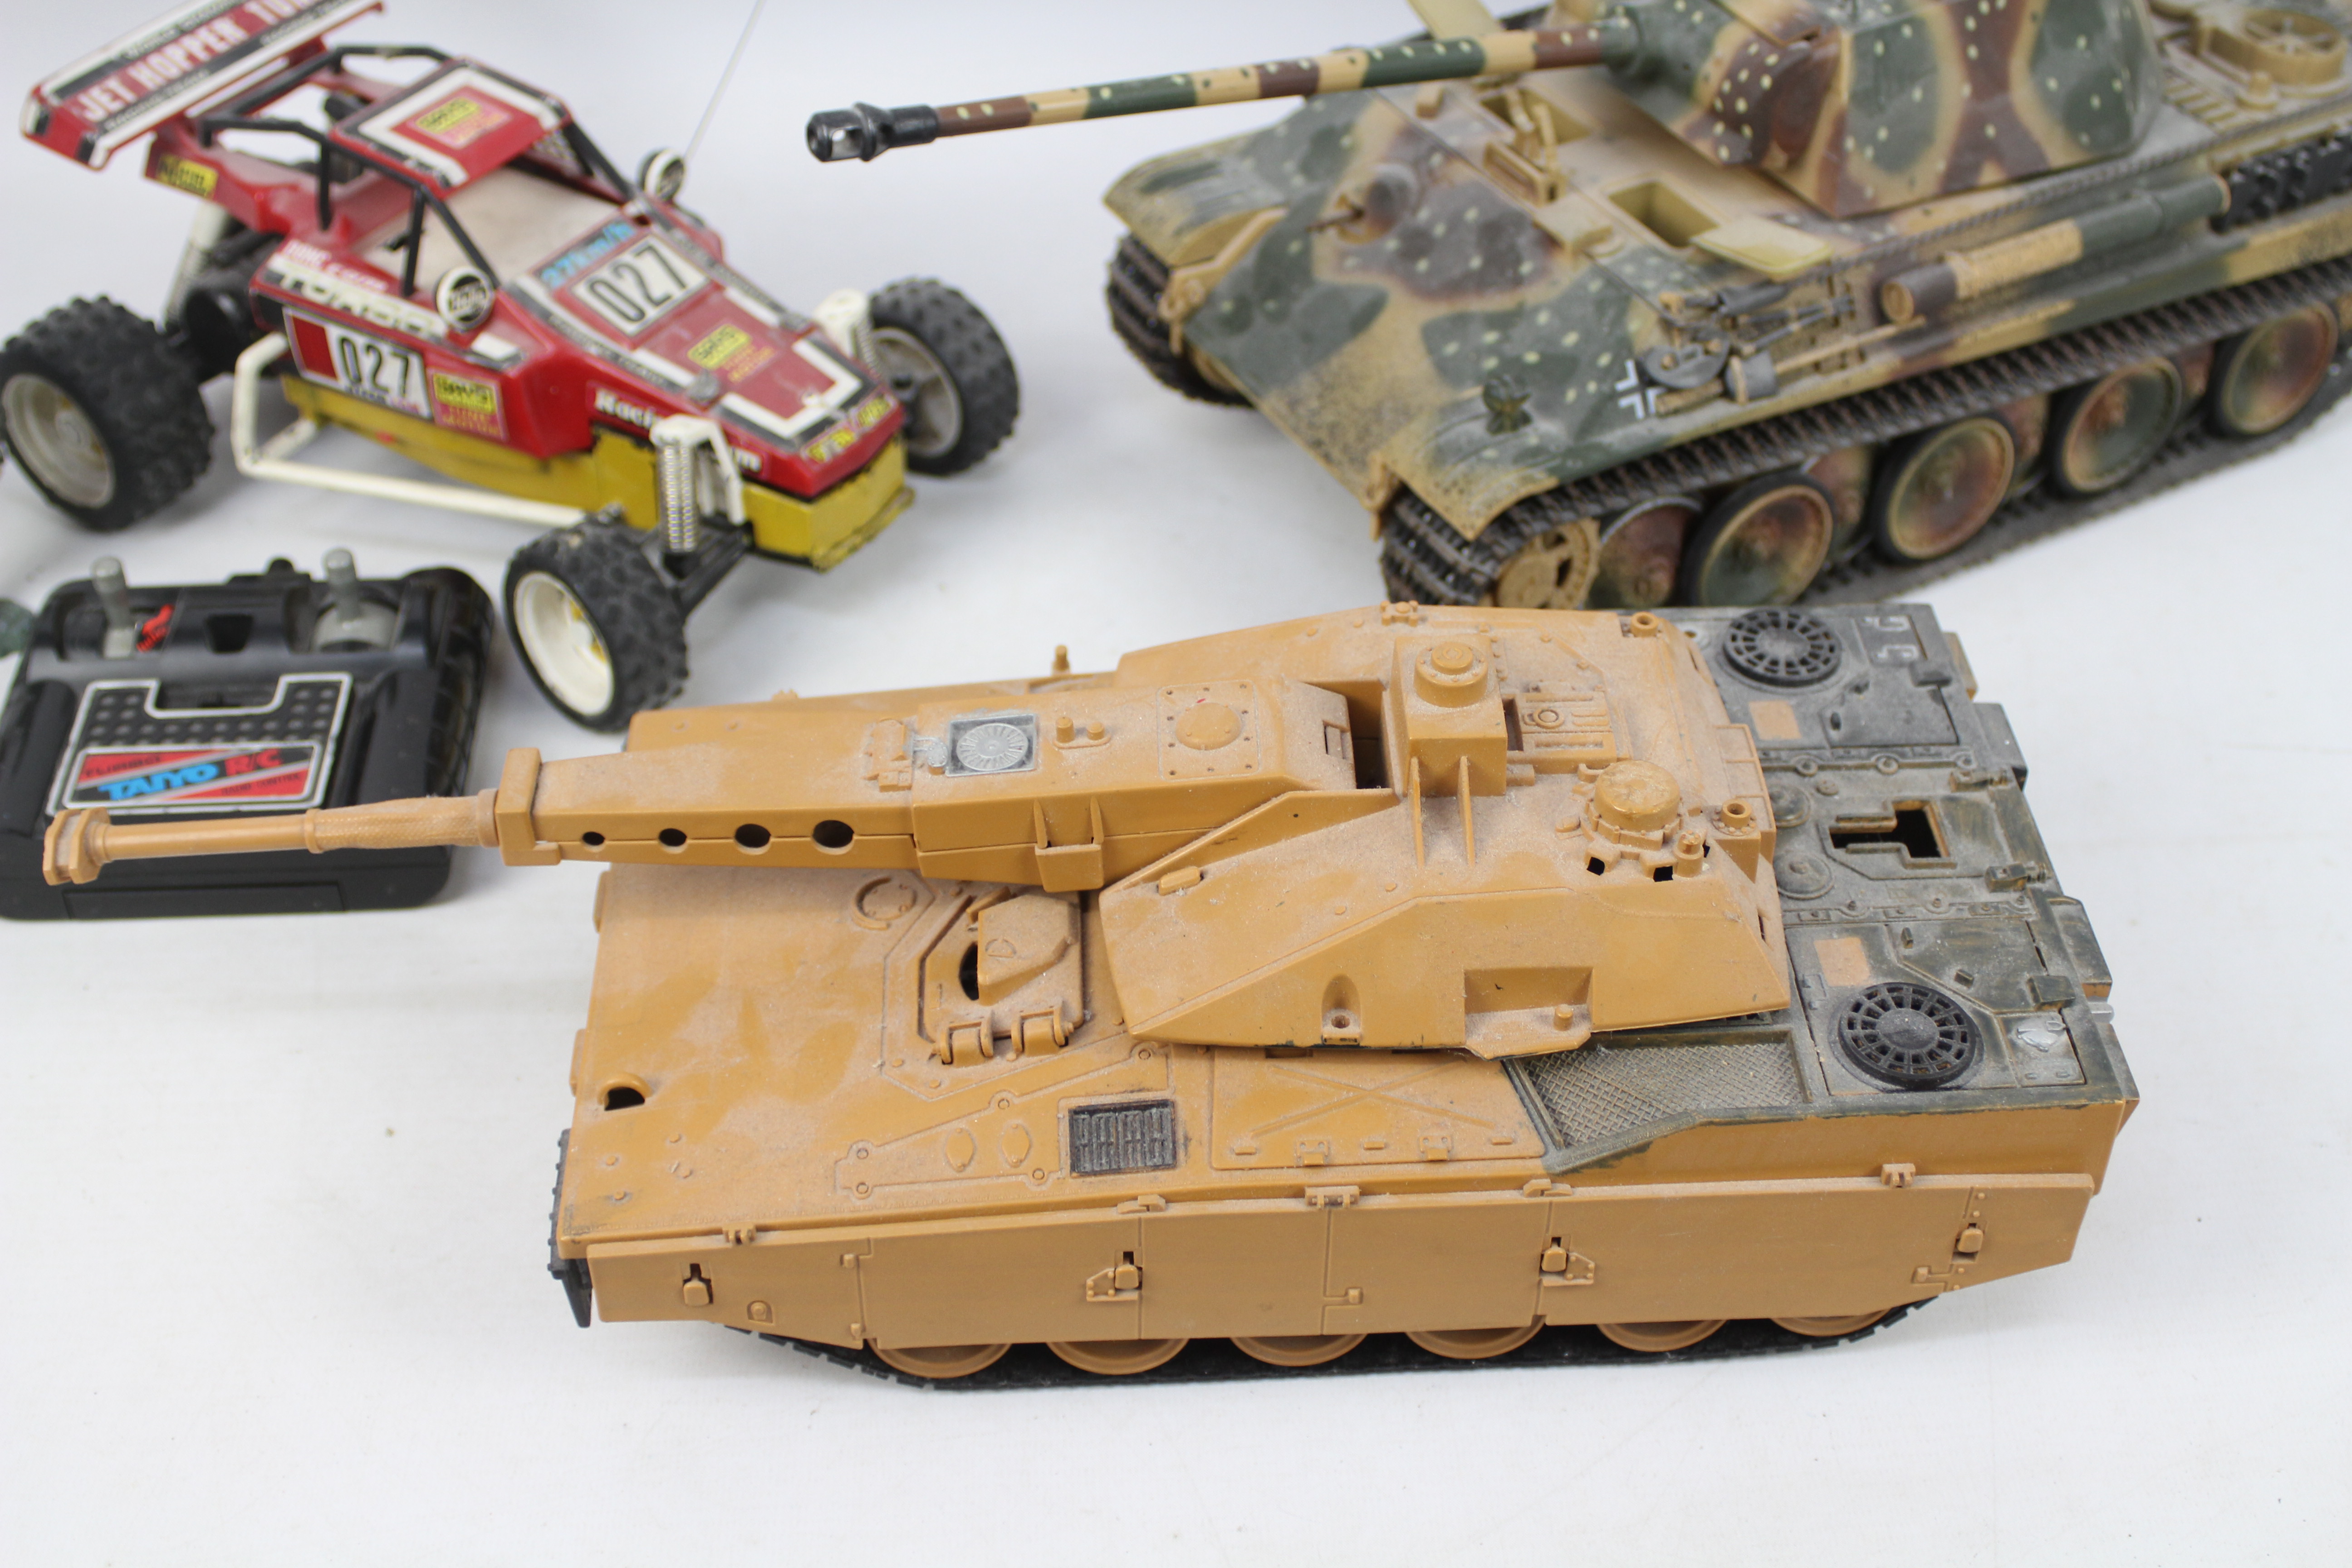 21st Century - Hasbro Bradley - Unimax - Tyco - 2 x large scale tank model, - Image 5 of 9